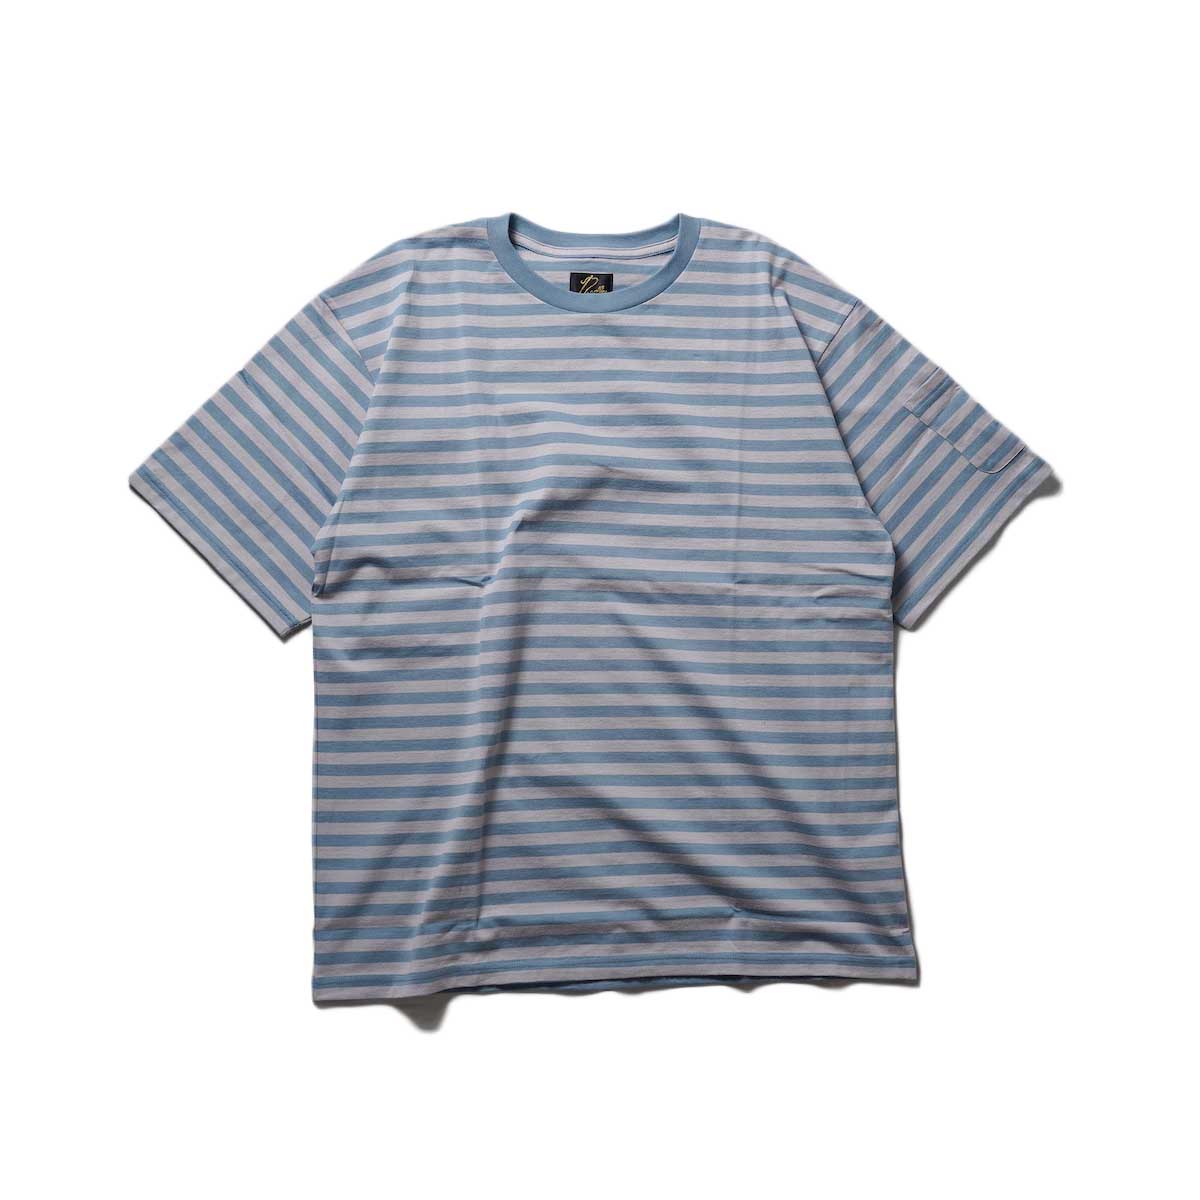 Needles / S/S Crew Neck Tee - Cotton Stripe Jersey (Blu Grey)